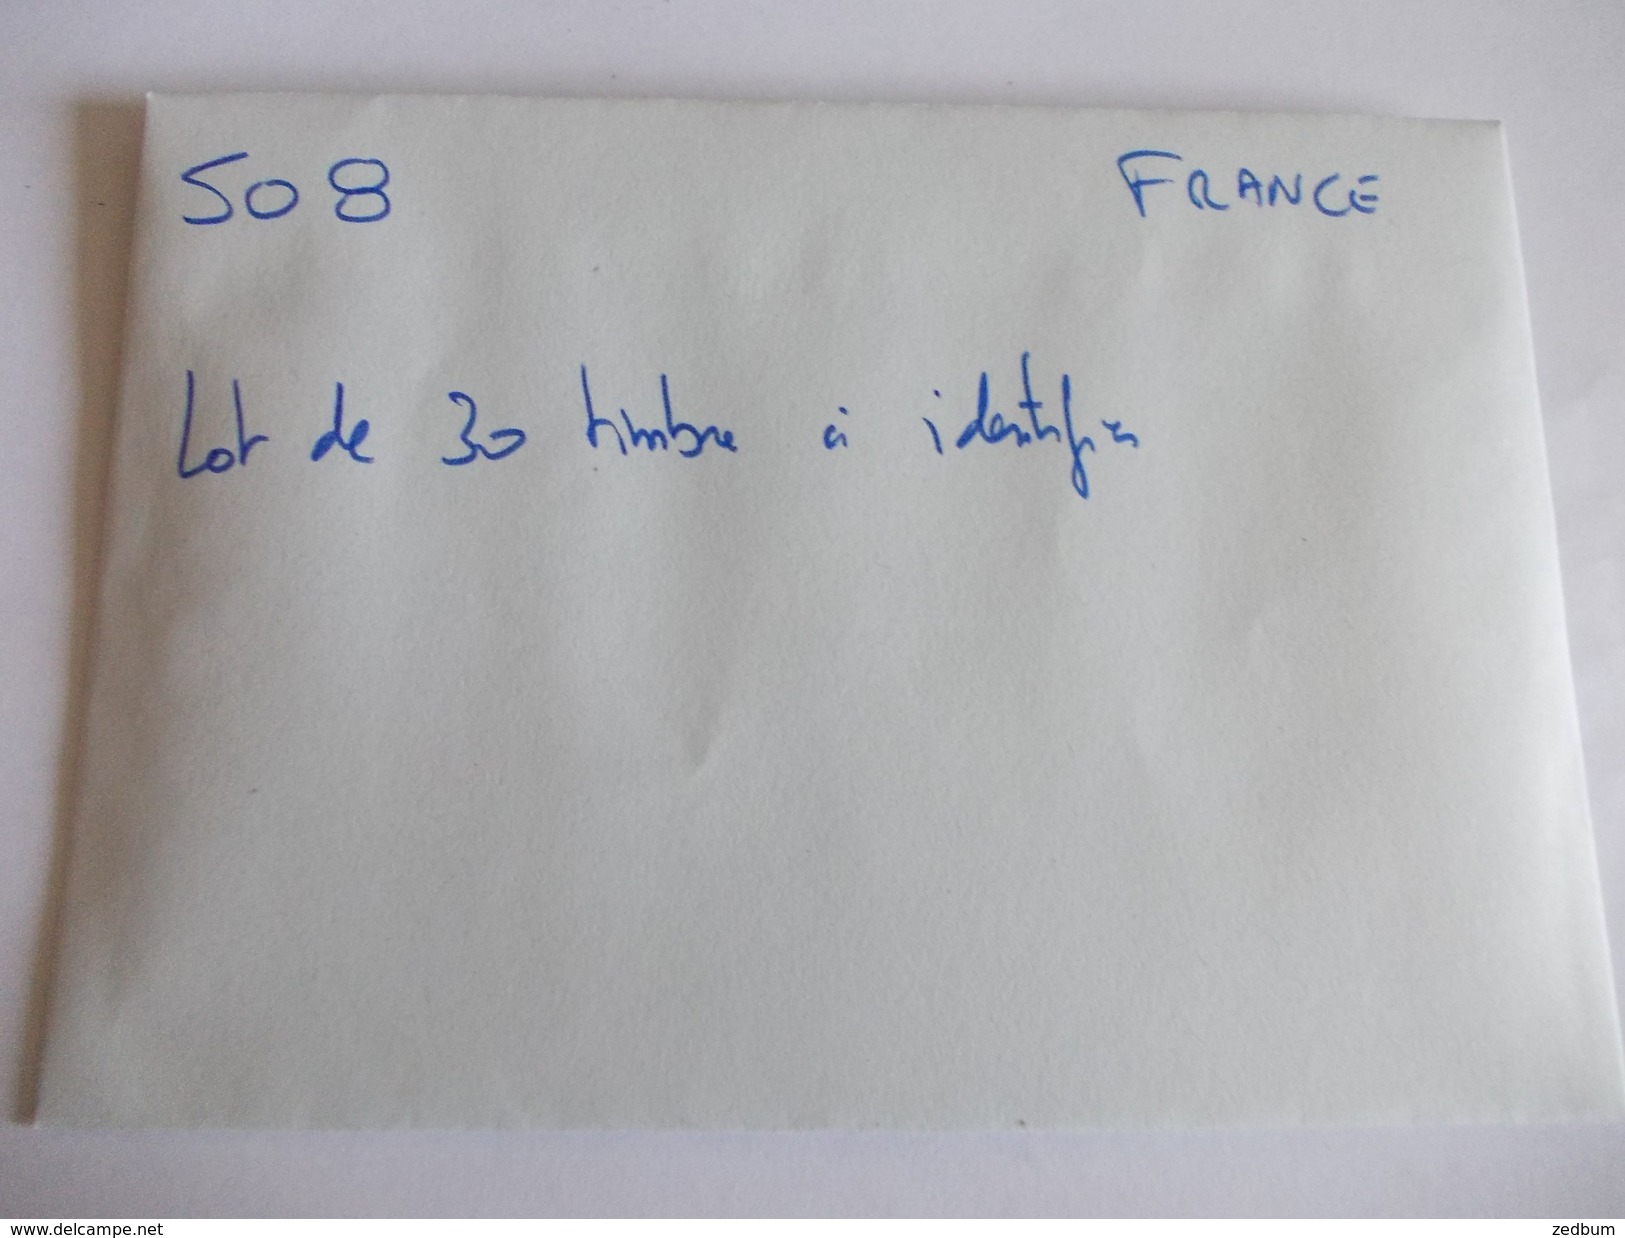 TIMBRE France Lot De 30 Timbres à Identifier N° 508 - Lots & Kiloware (max. 999 Stück)